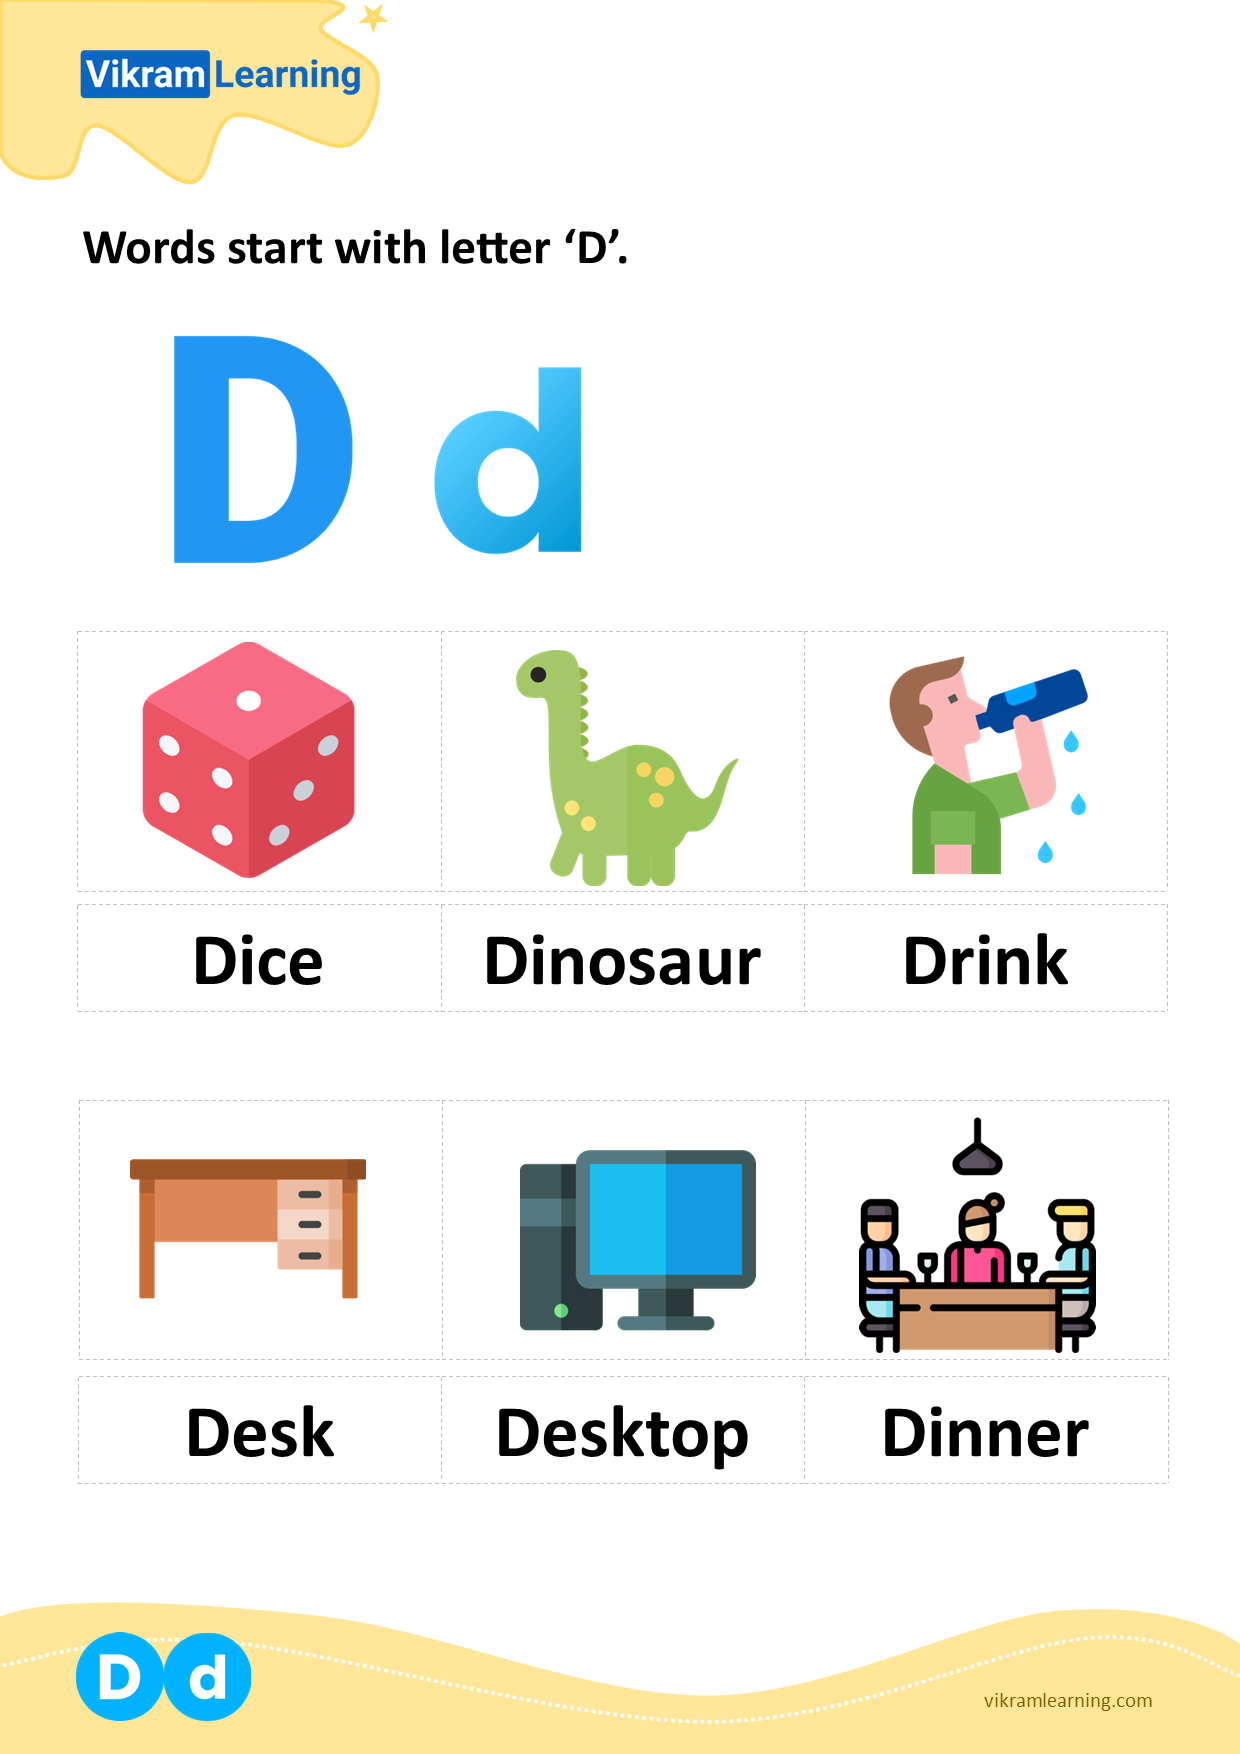 Download words start with letter 'd' worksheets